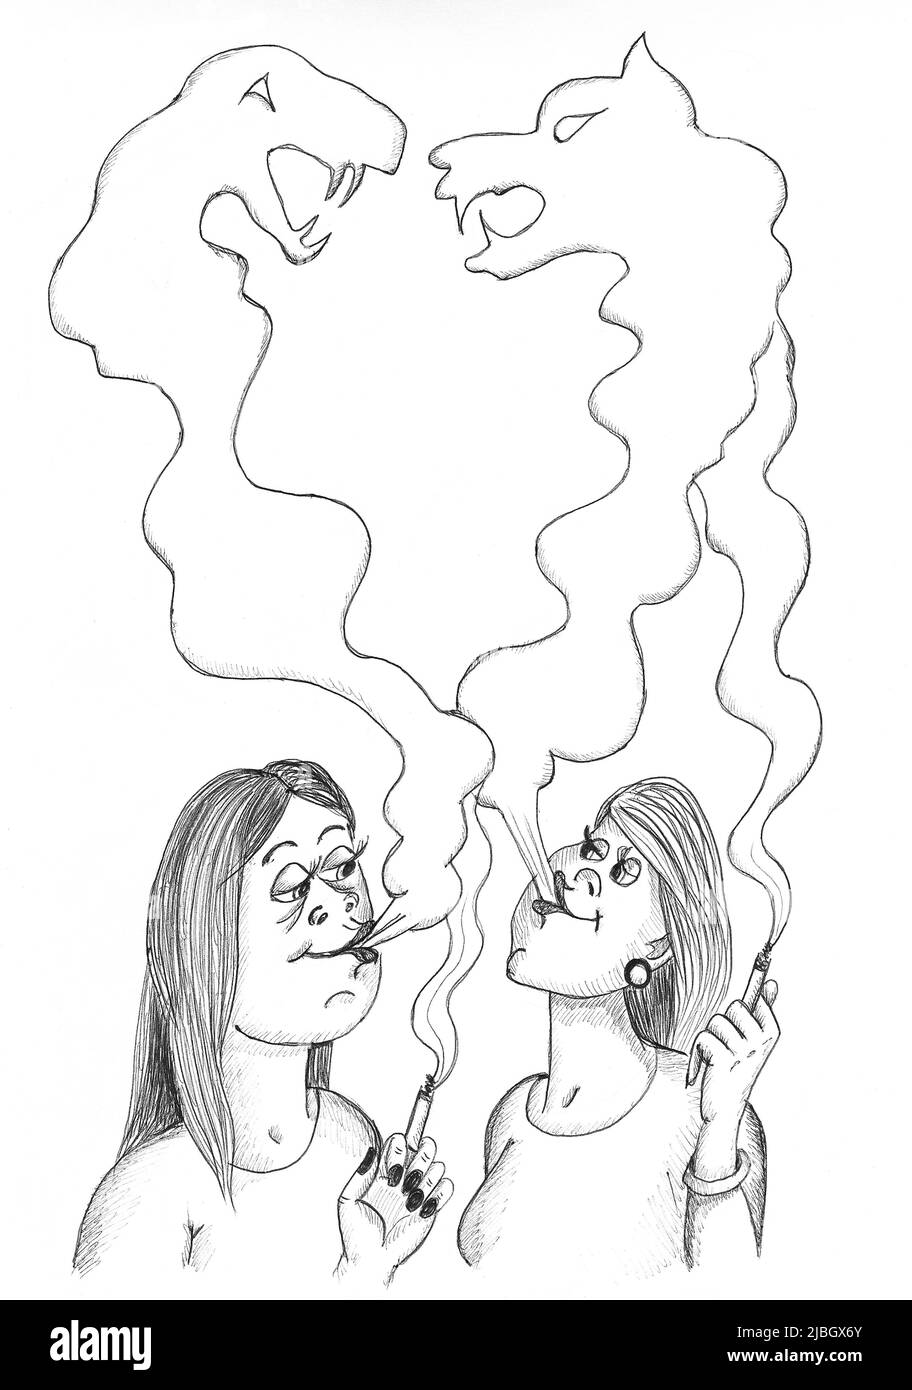 Two women smoking and their smoke fighting. Illustration. Stock Photo